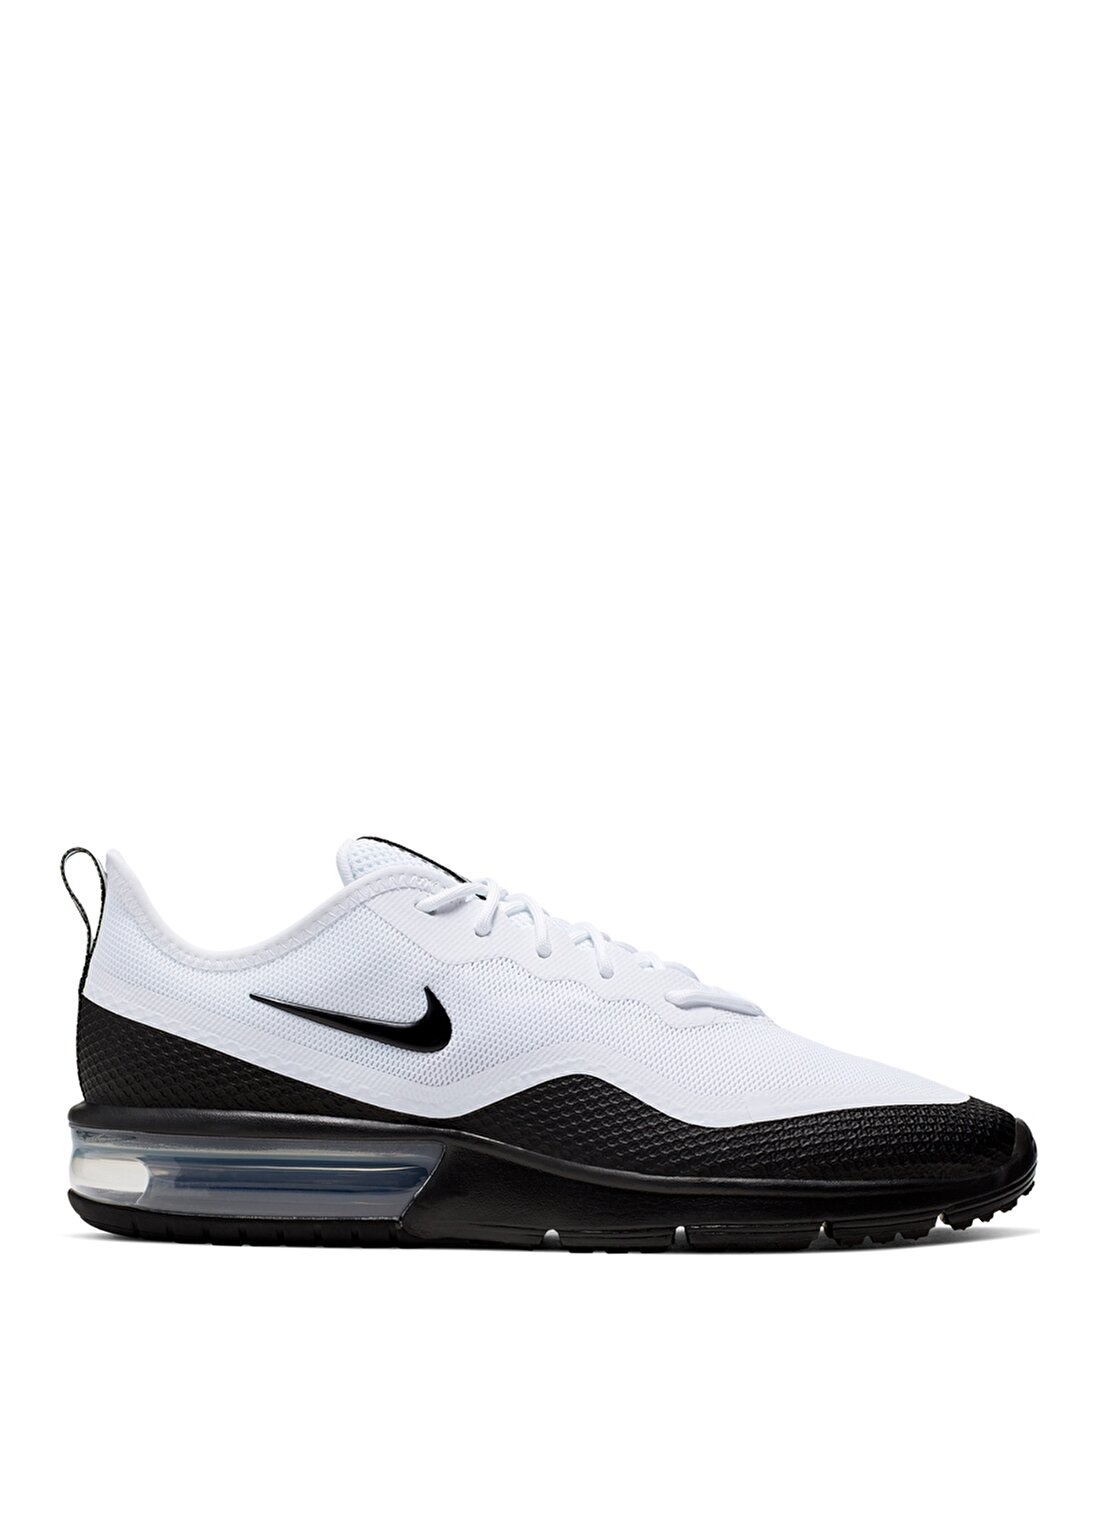 Nike Air Max Sequent 4.5 Lifestyle Ayakkabı